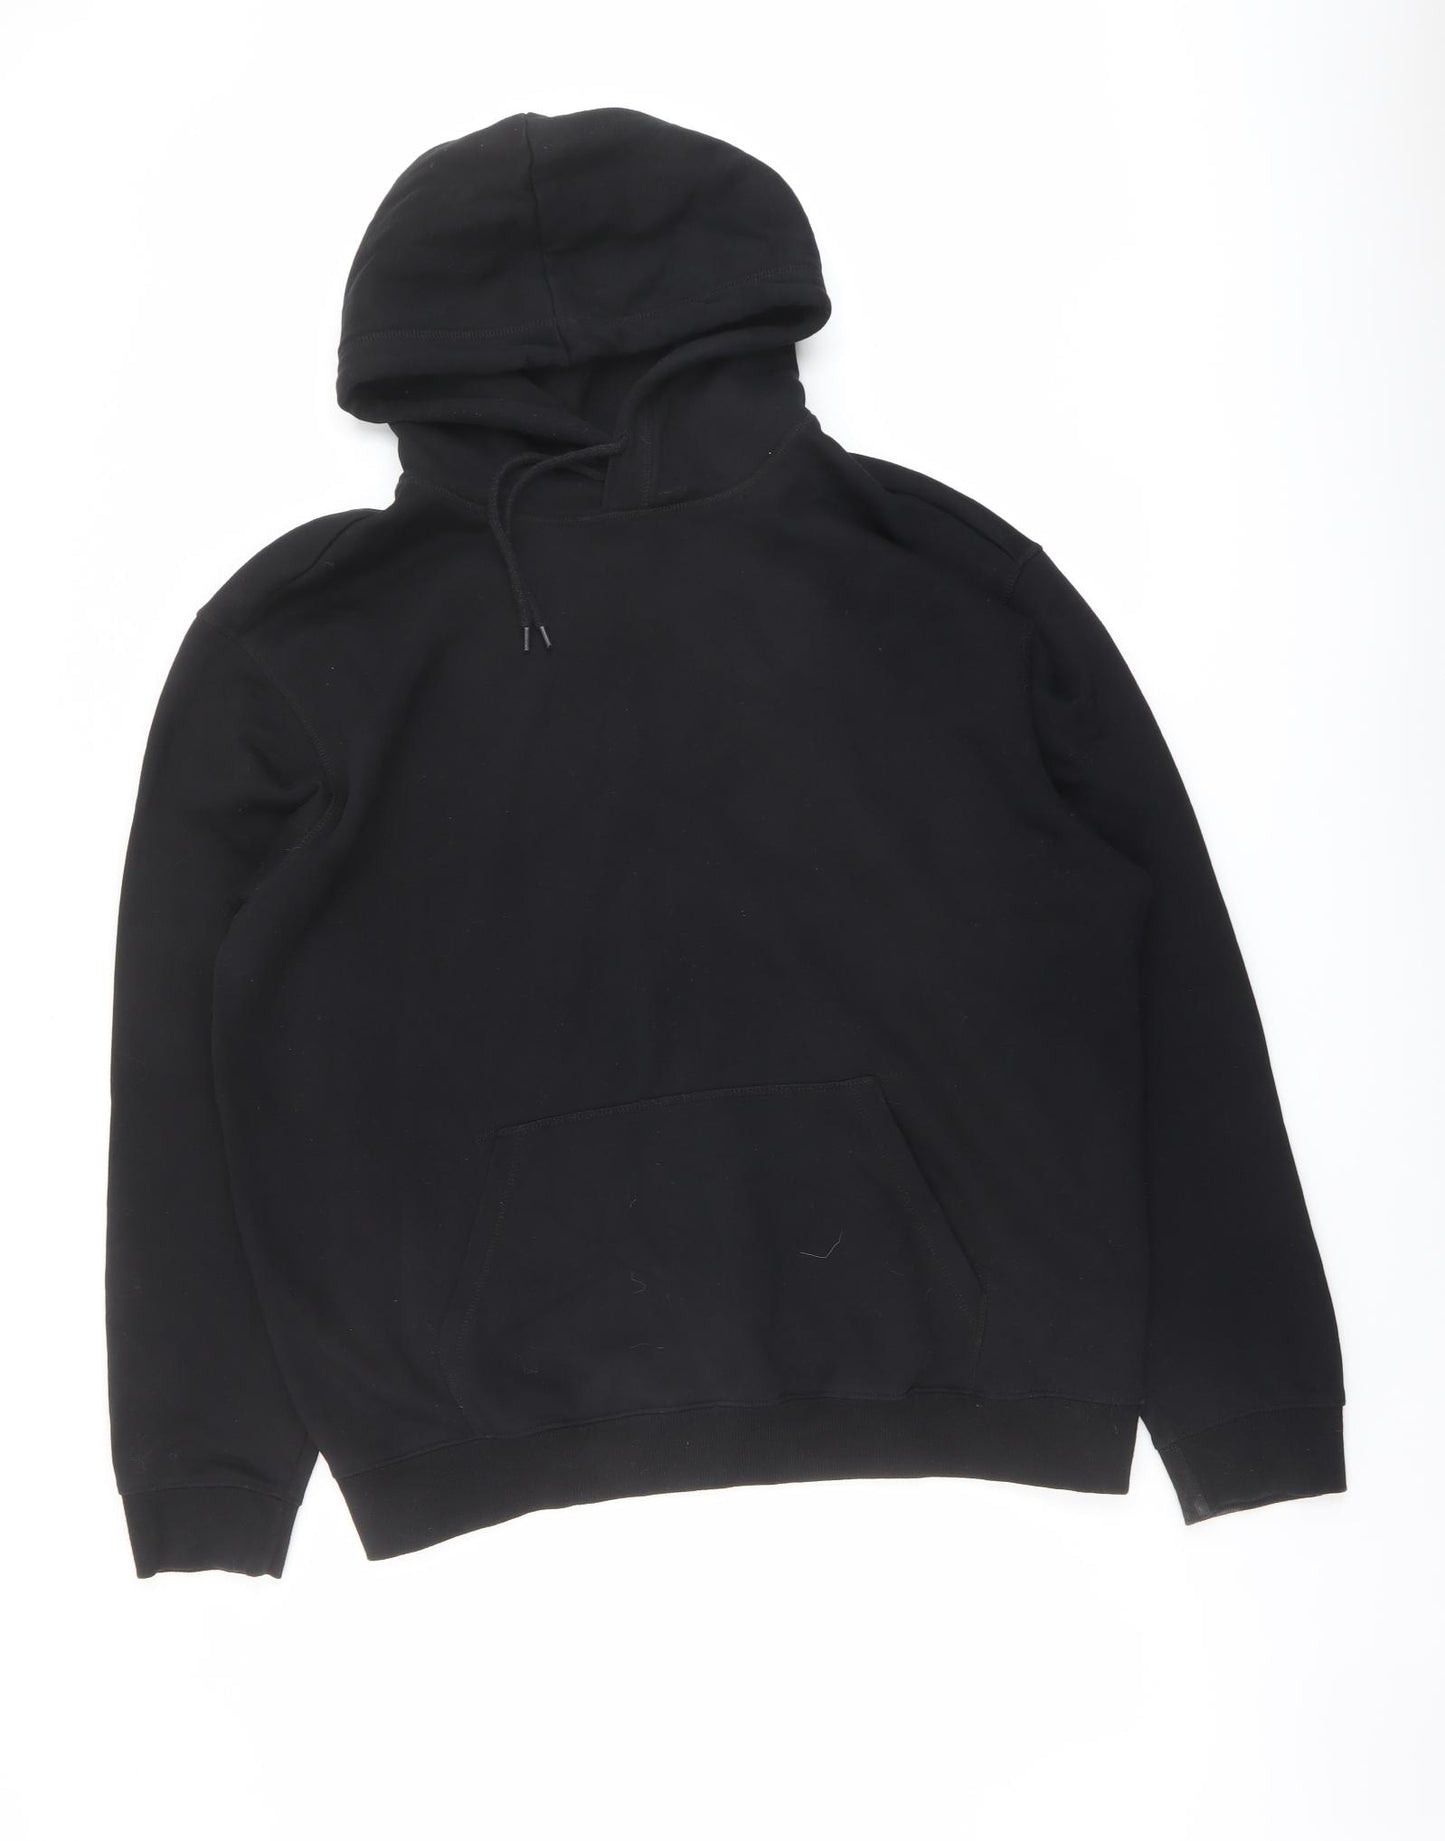 H&M Mens Black Cotton Pullover Hoodie Size L